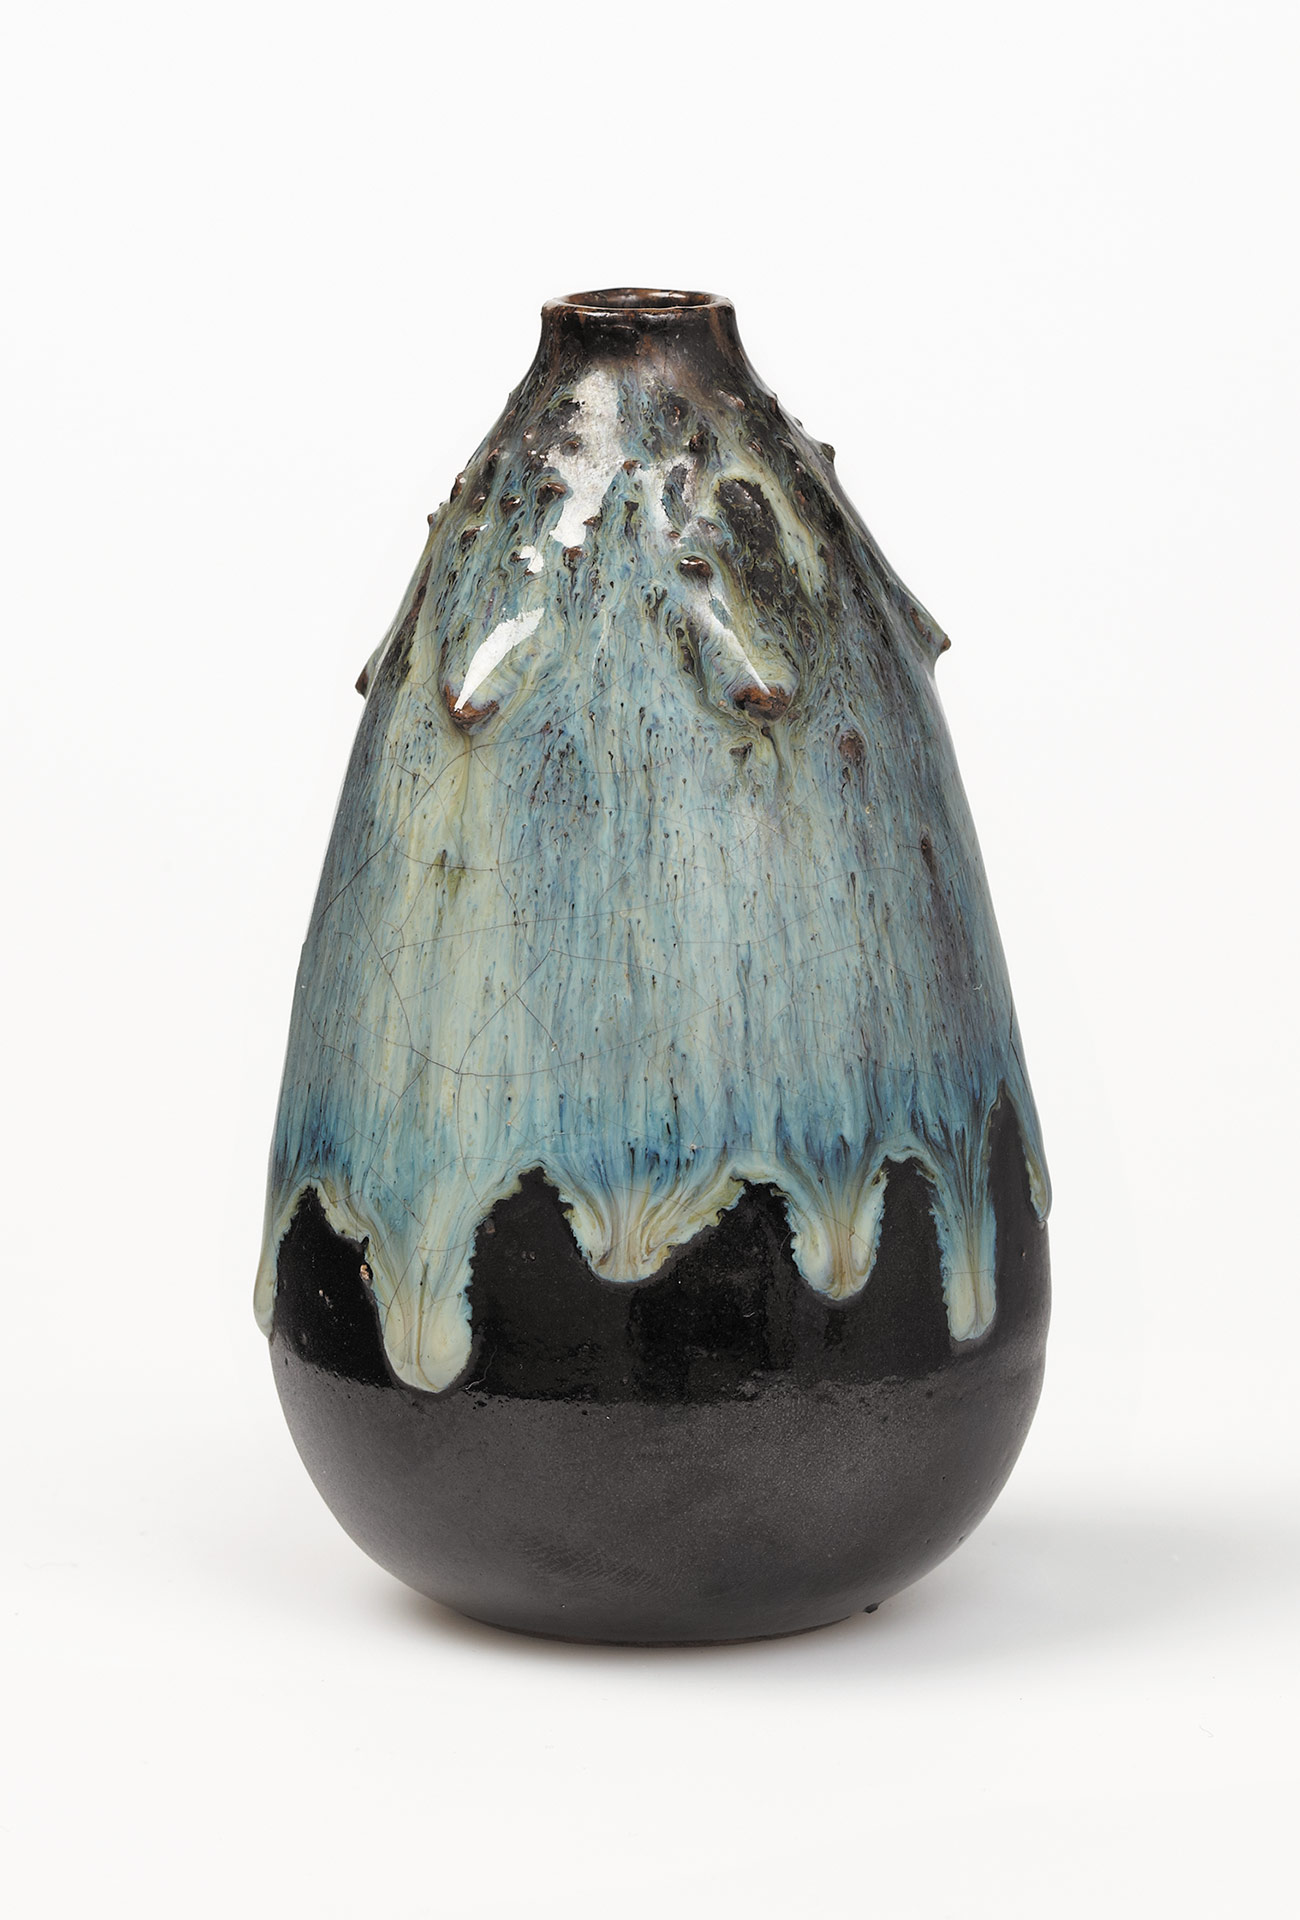 Sake bottle from the 19th century. Ceramics, glaze, Japan